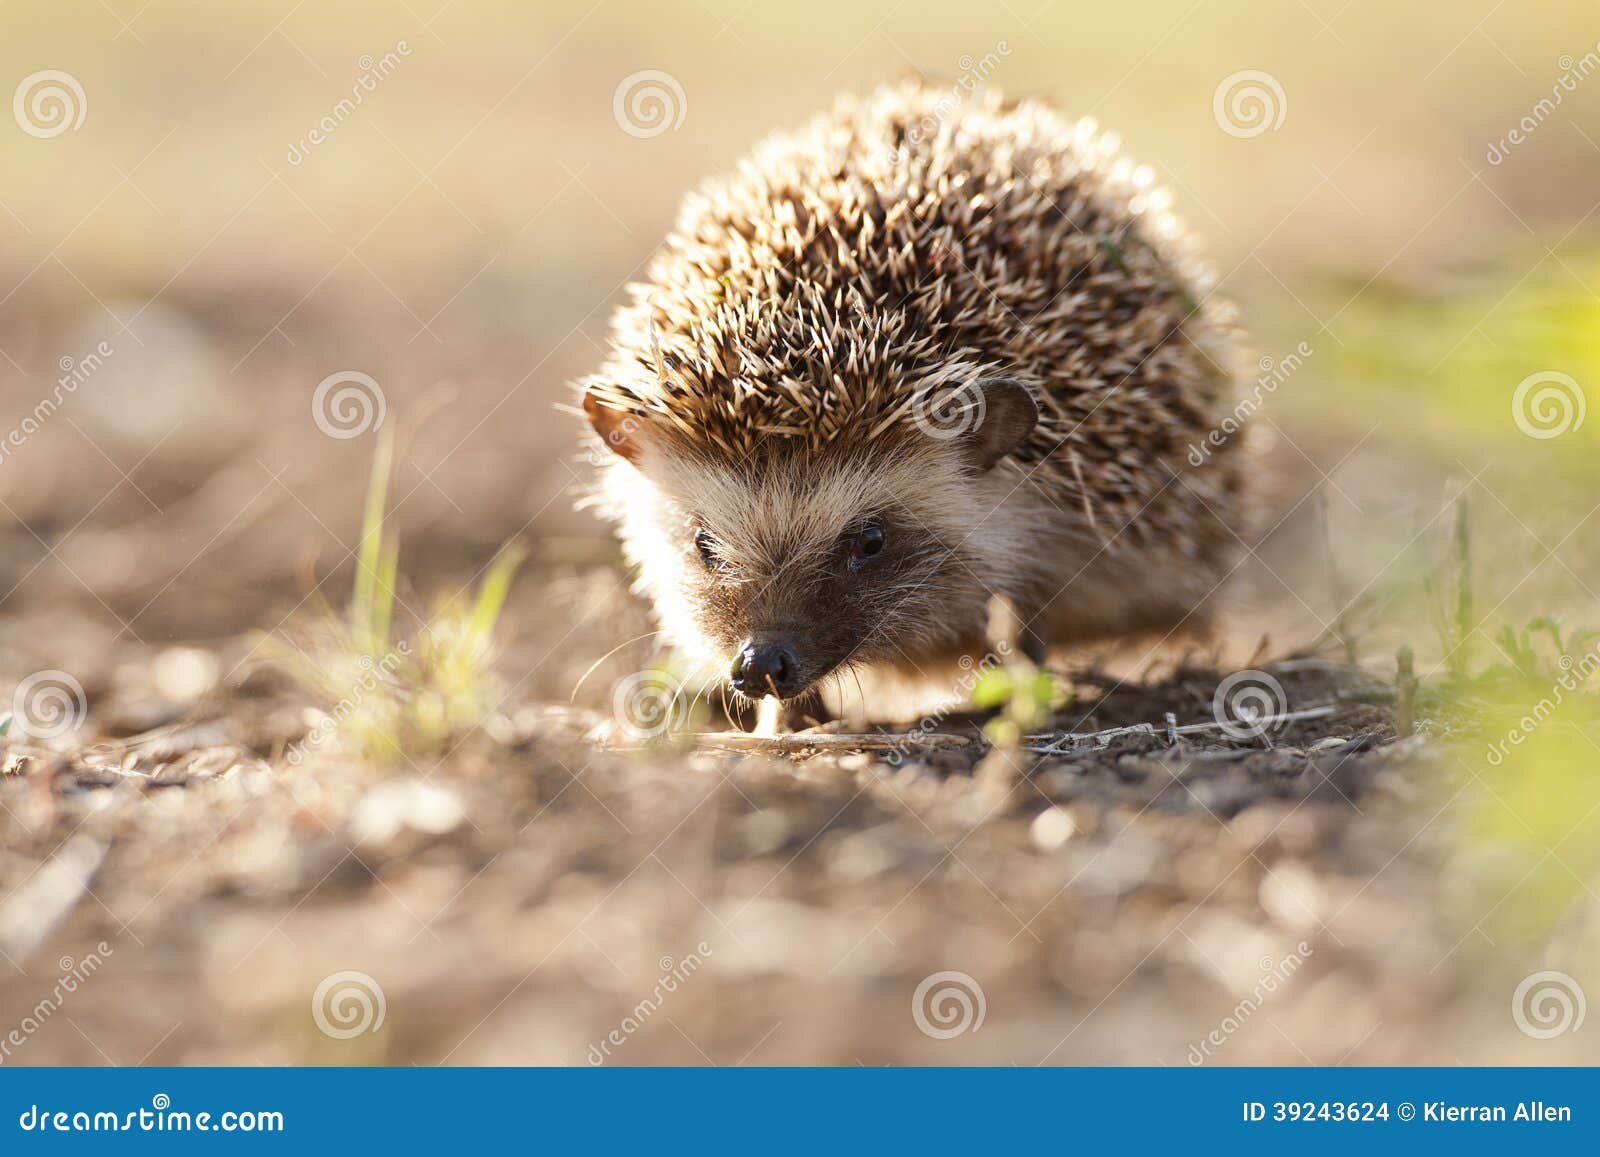 hedgehog in golden morning light